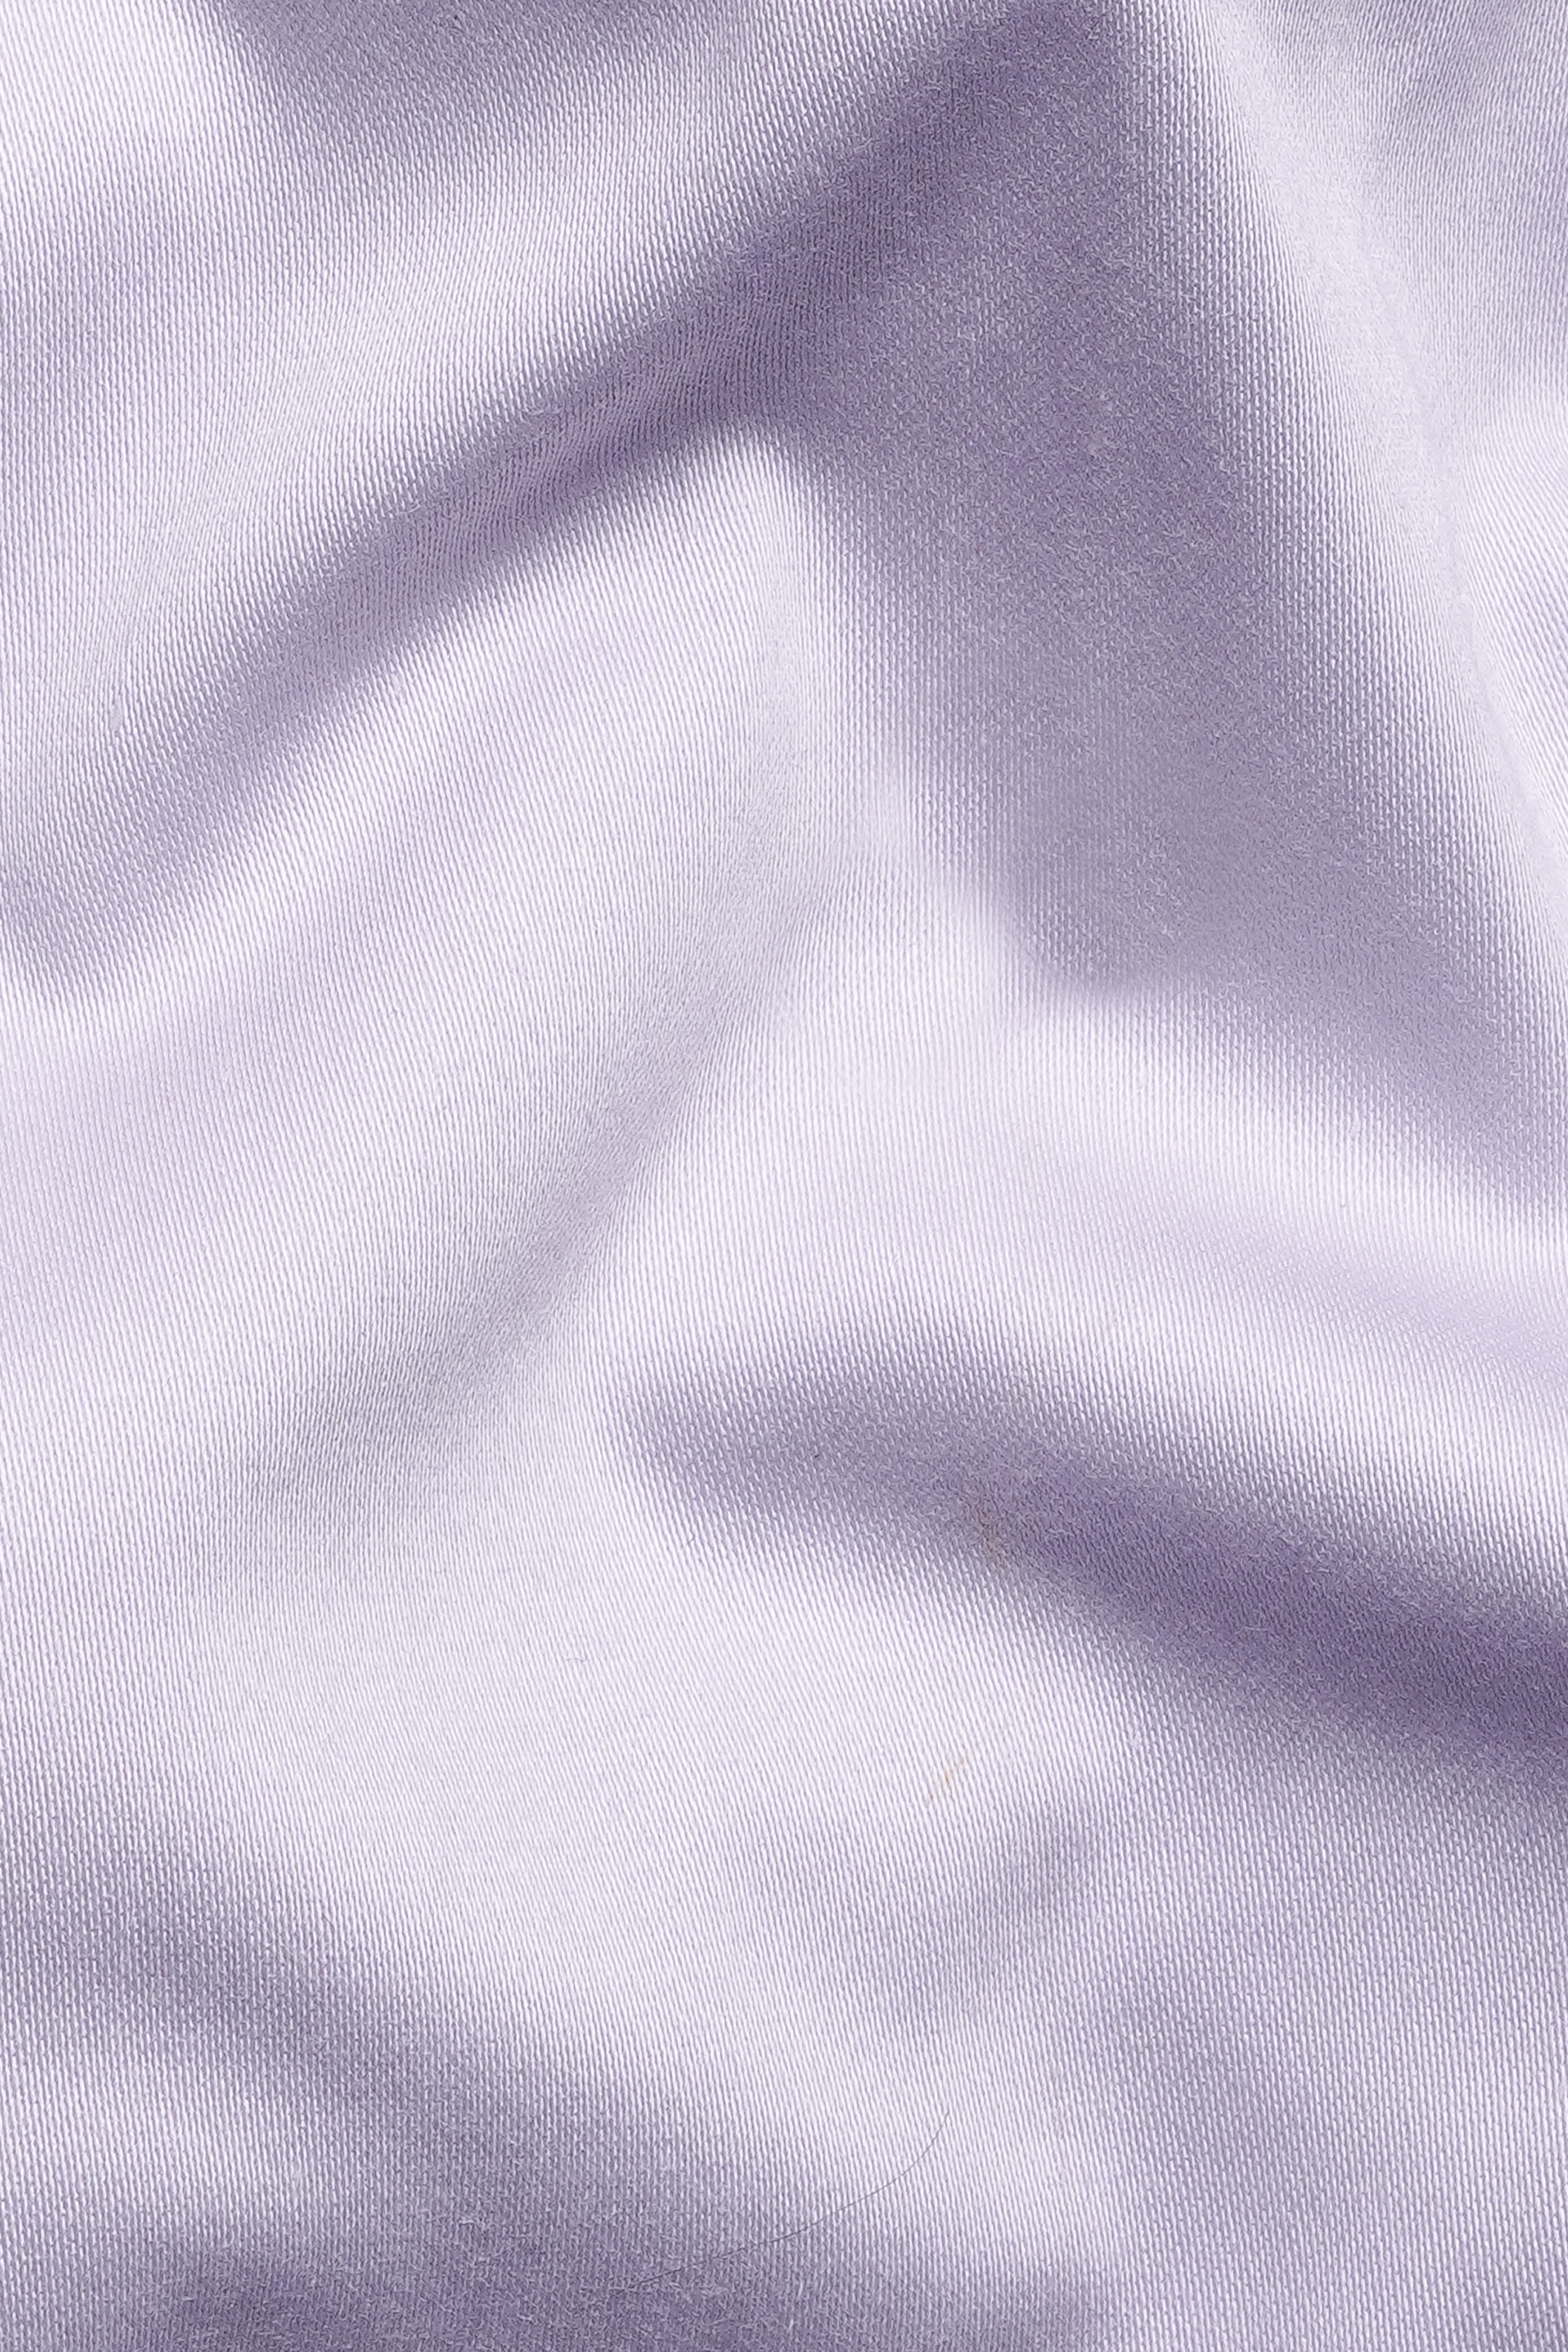 Snuff Lavender Premium Cotton Single Breasted Suit